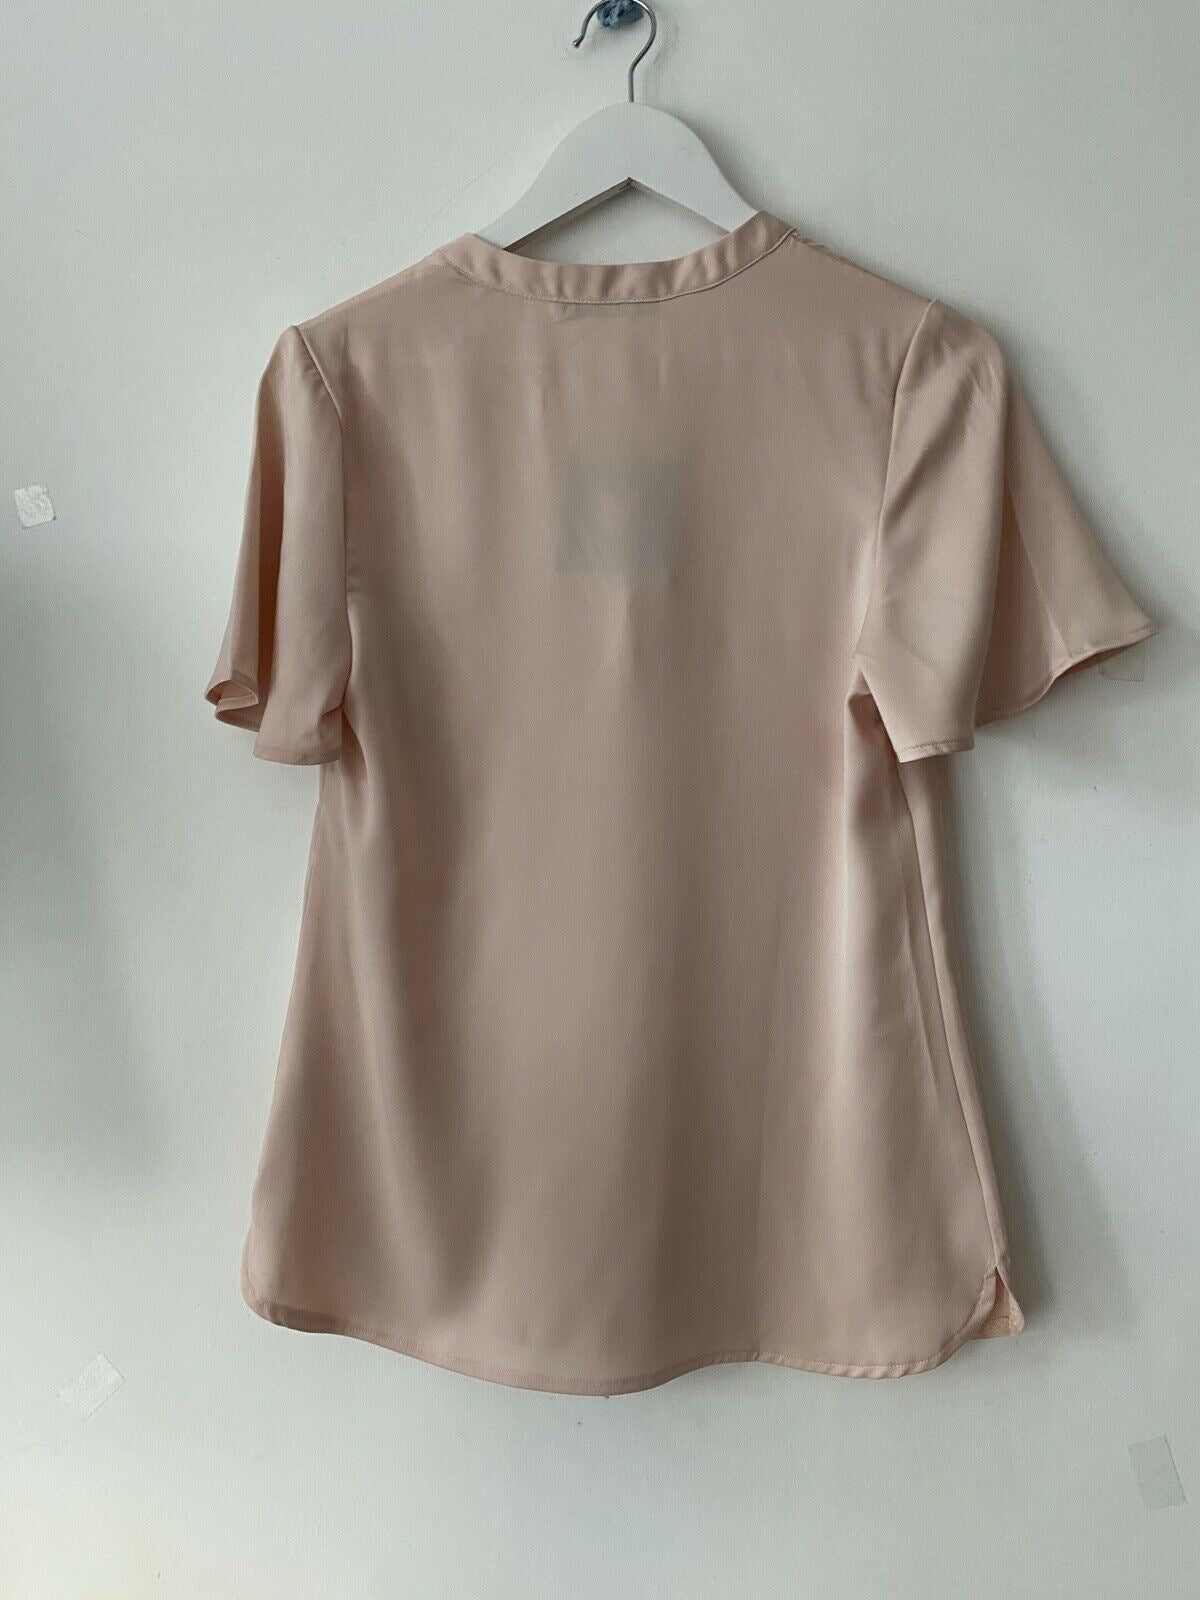 Very Blush Pink satin Type T-Shirt Size 8